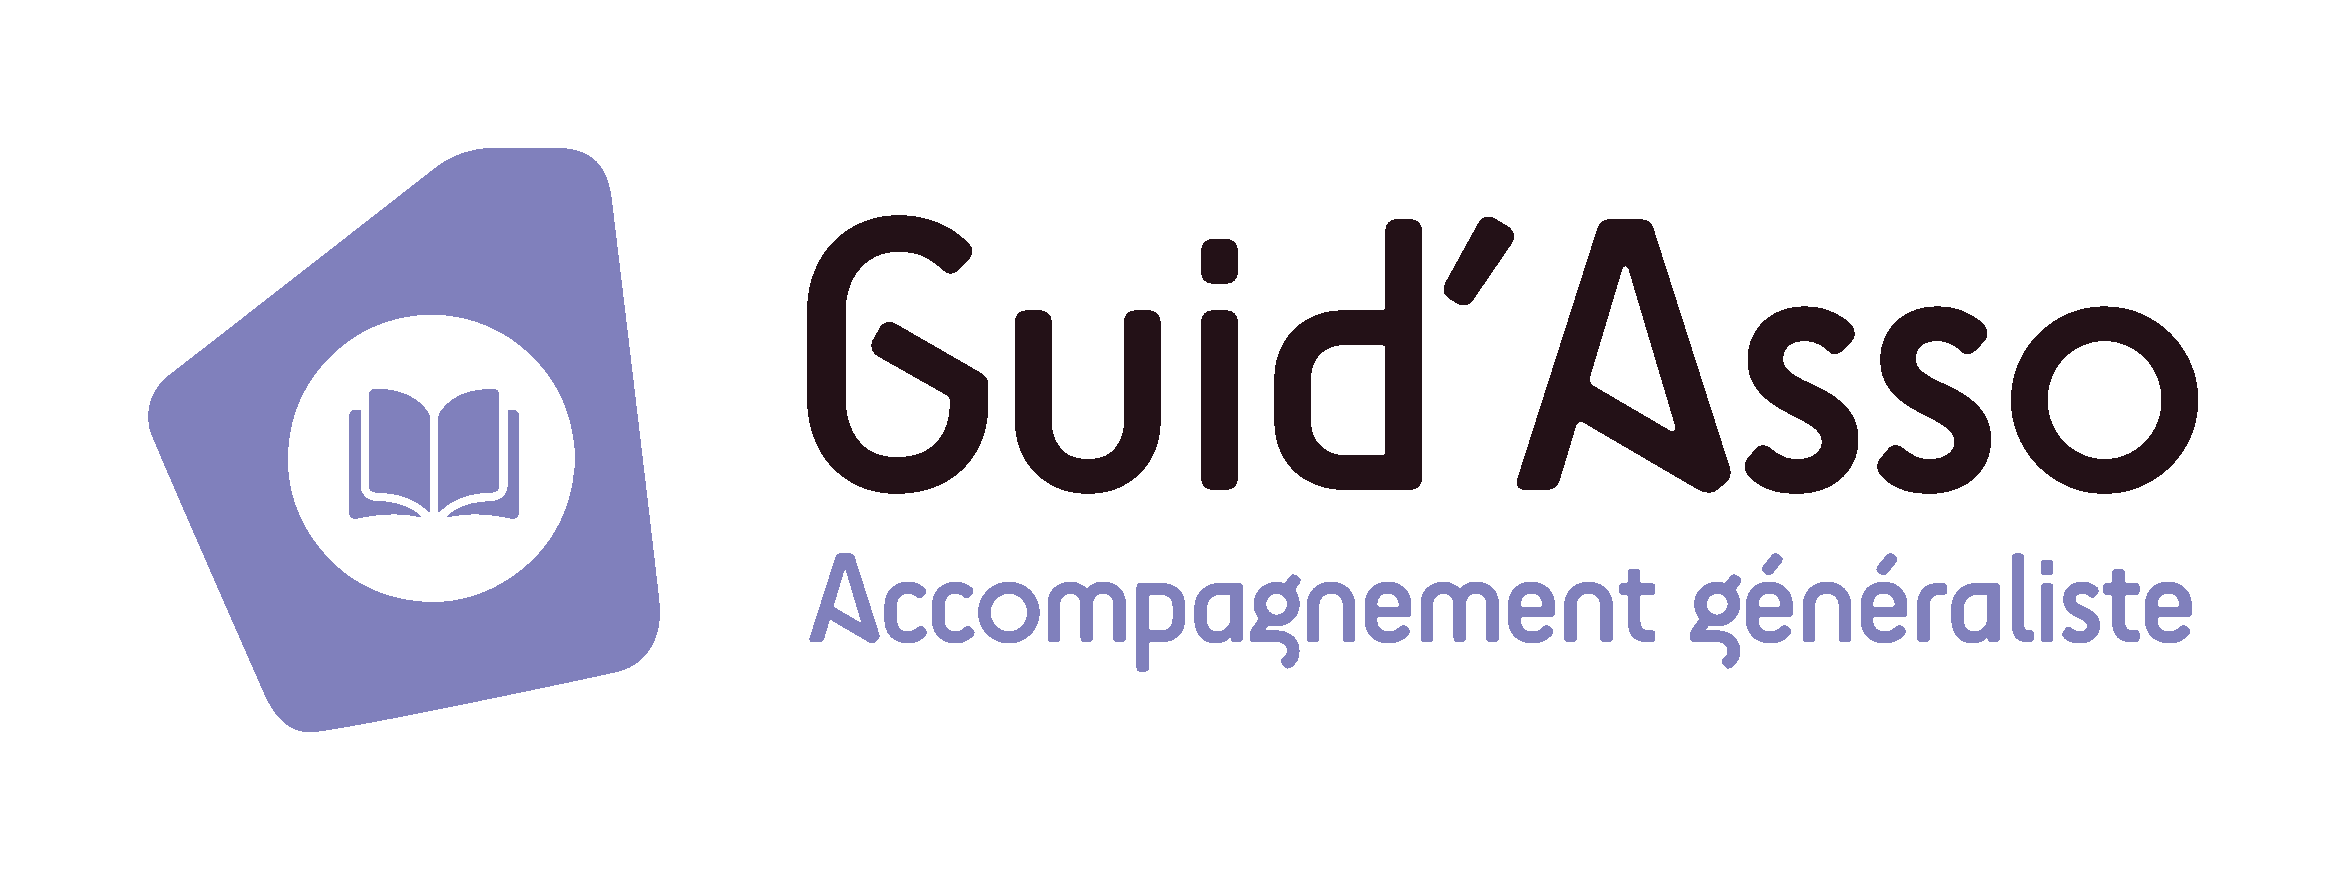 Guid'Asso logotype accomp. generaliste   CAP